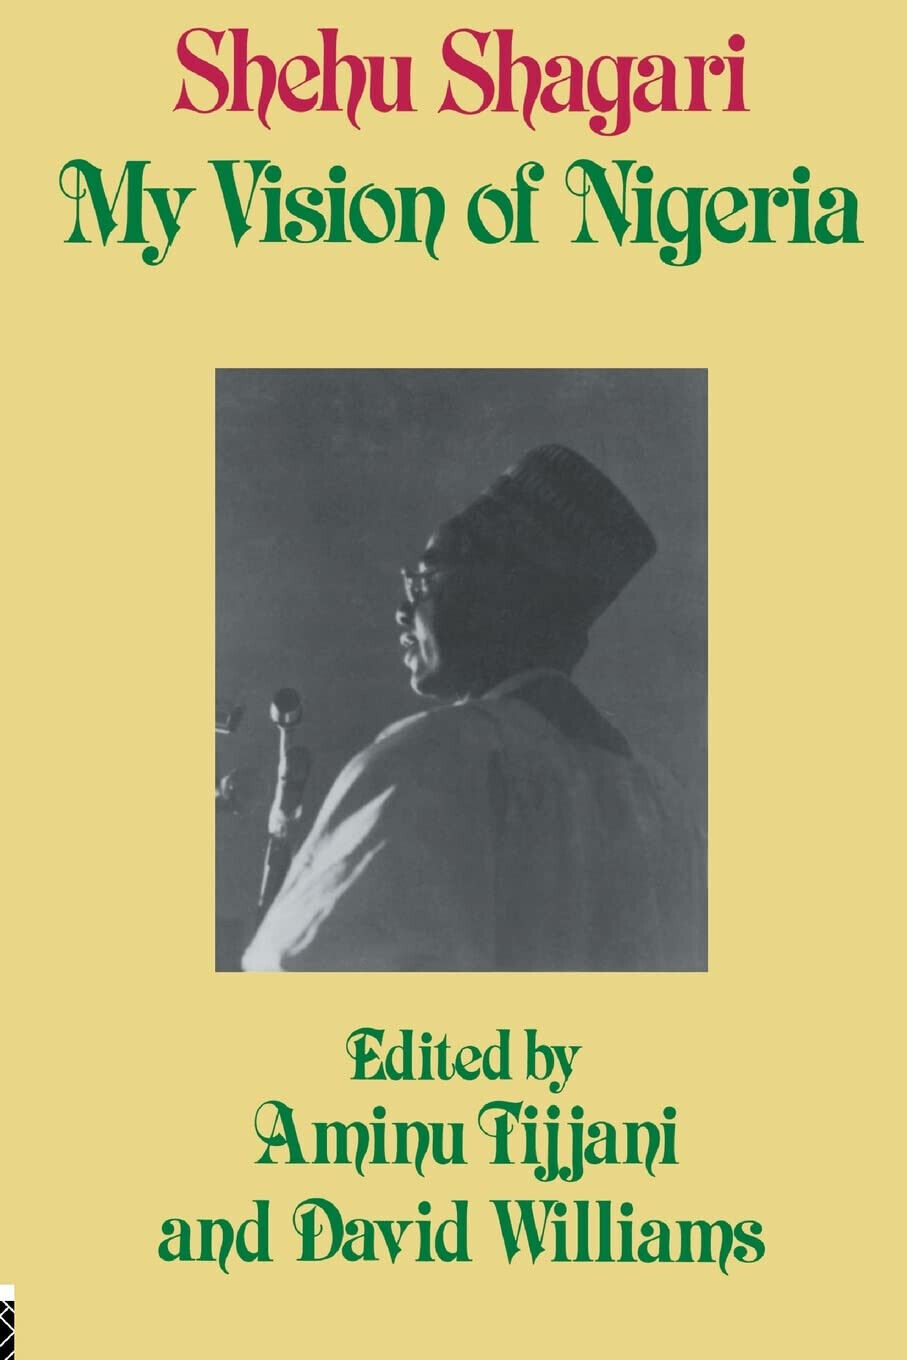 My Vision Of Nigeria - Aminu Tijjani, David Williams, Shehu Shagari - 1981